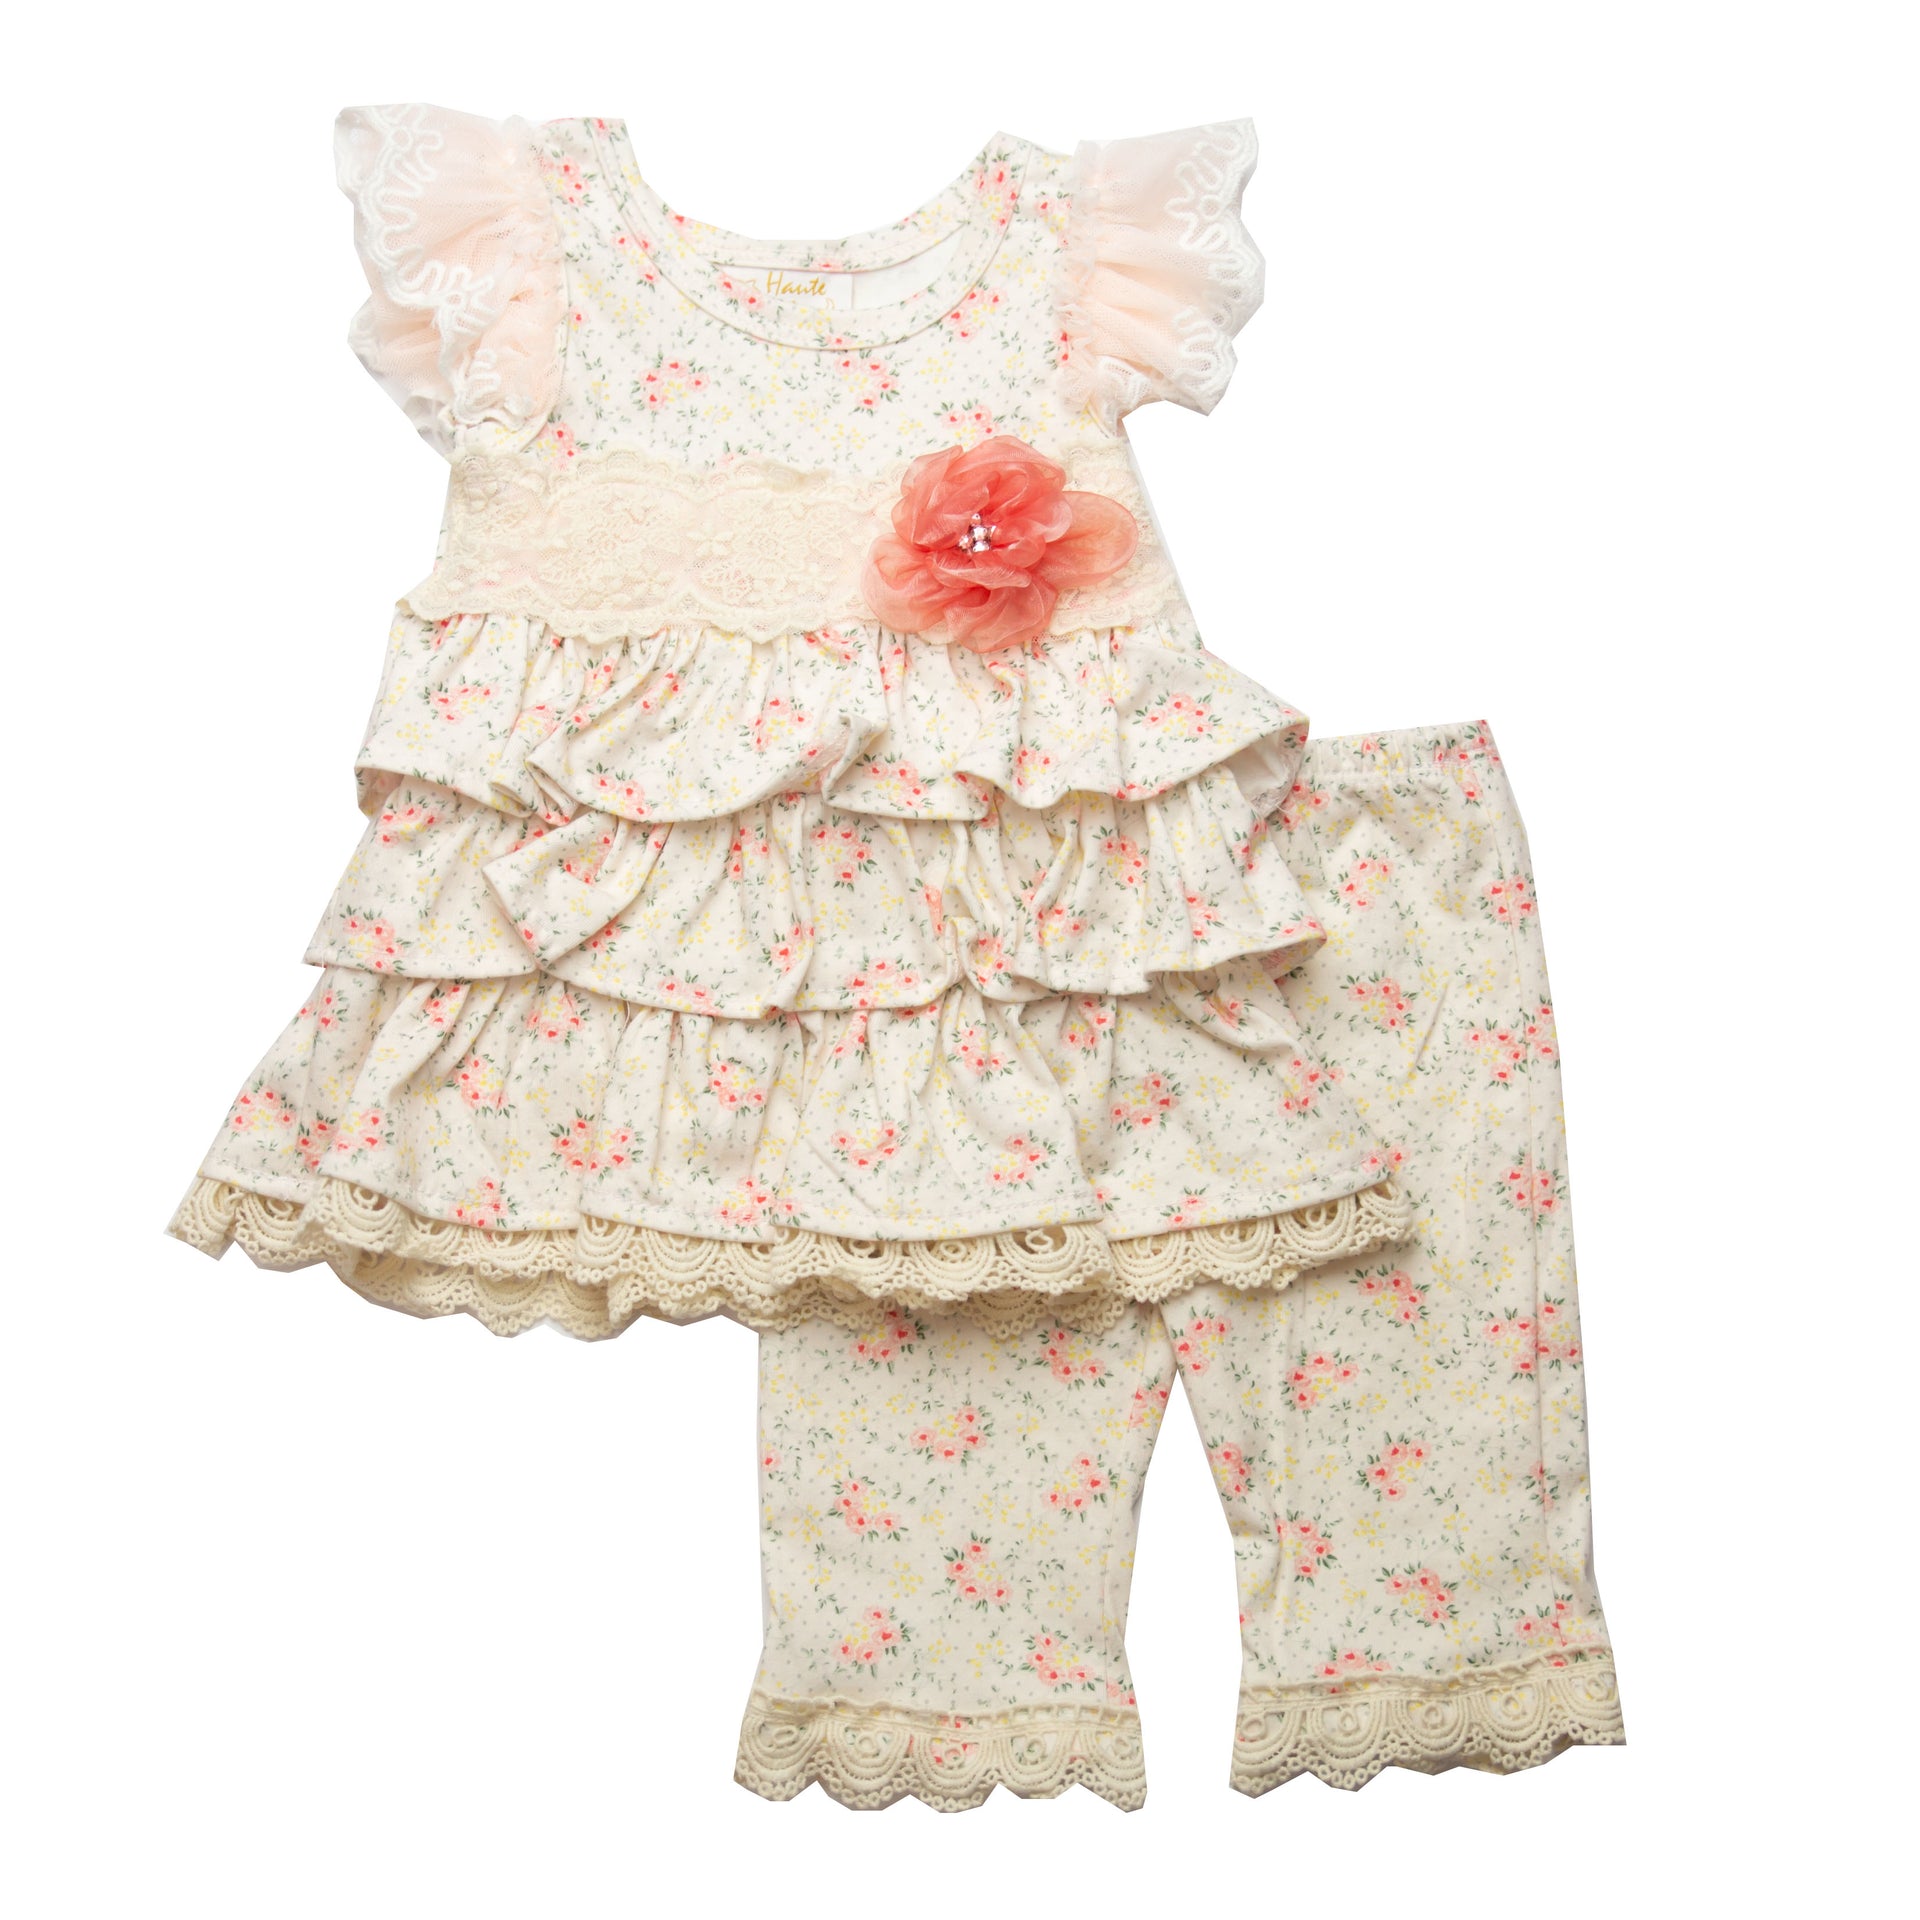 Hint Of Spring Infant Toddler Girls Tunic Set